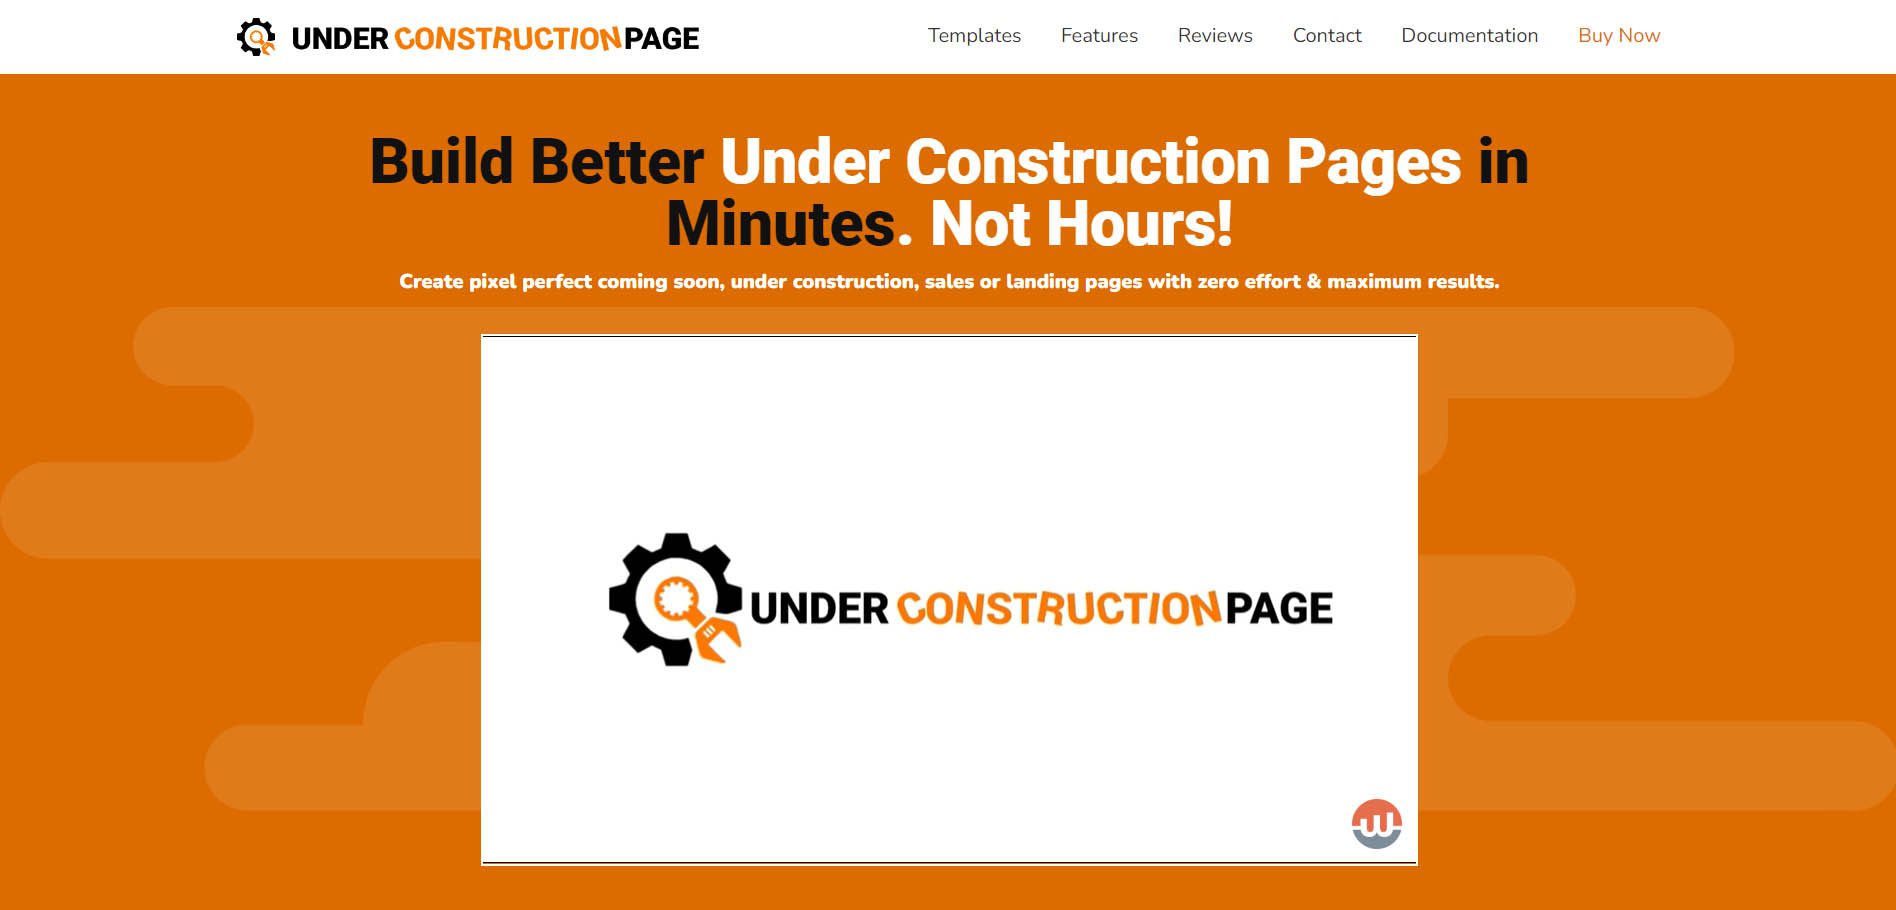 Under Construction Page WordPress Plugin